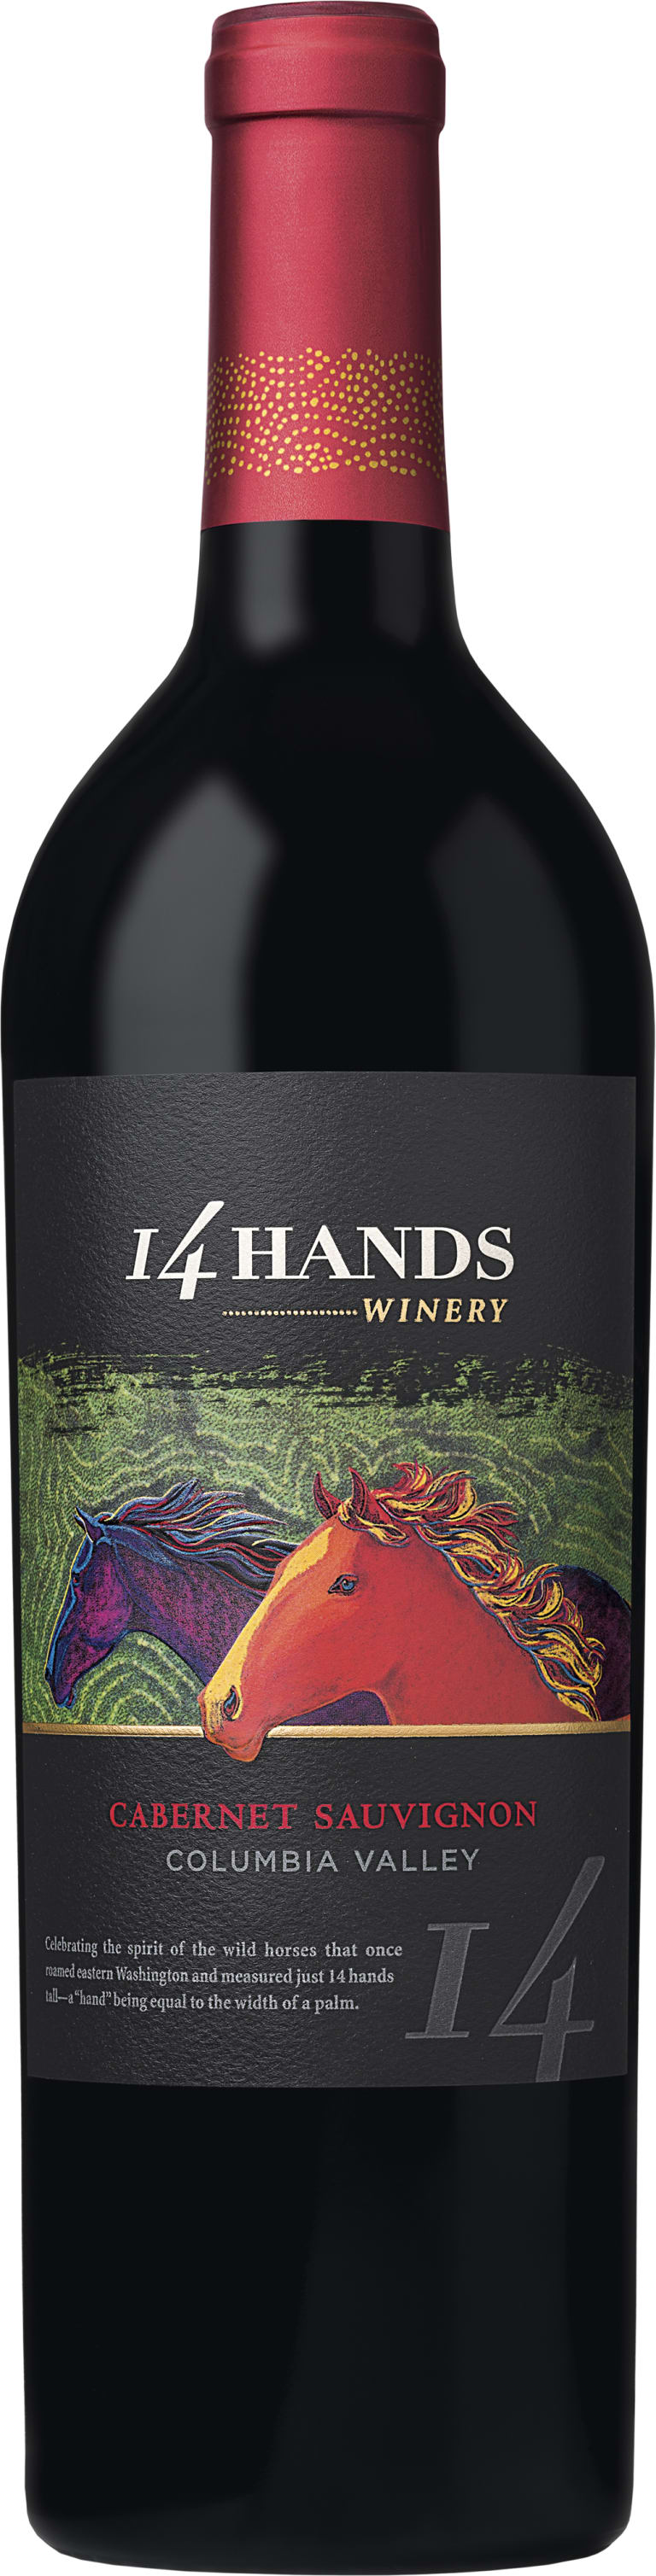 14 Hands Winery Cabernet Sauvignon 2017